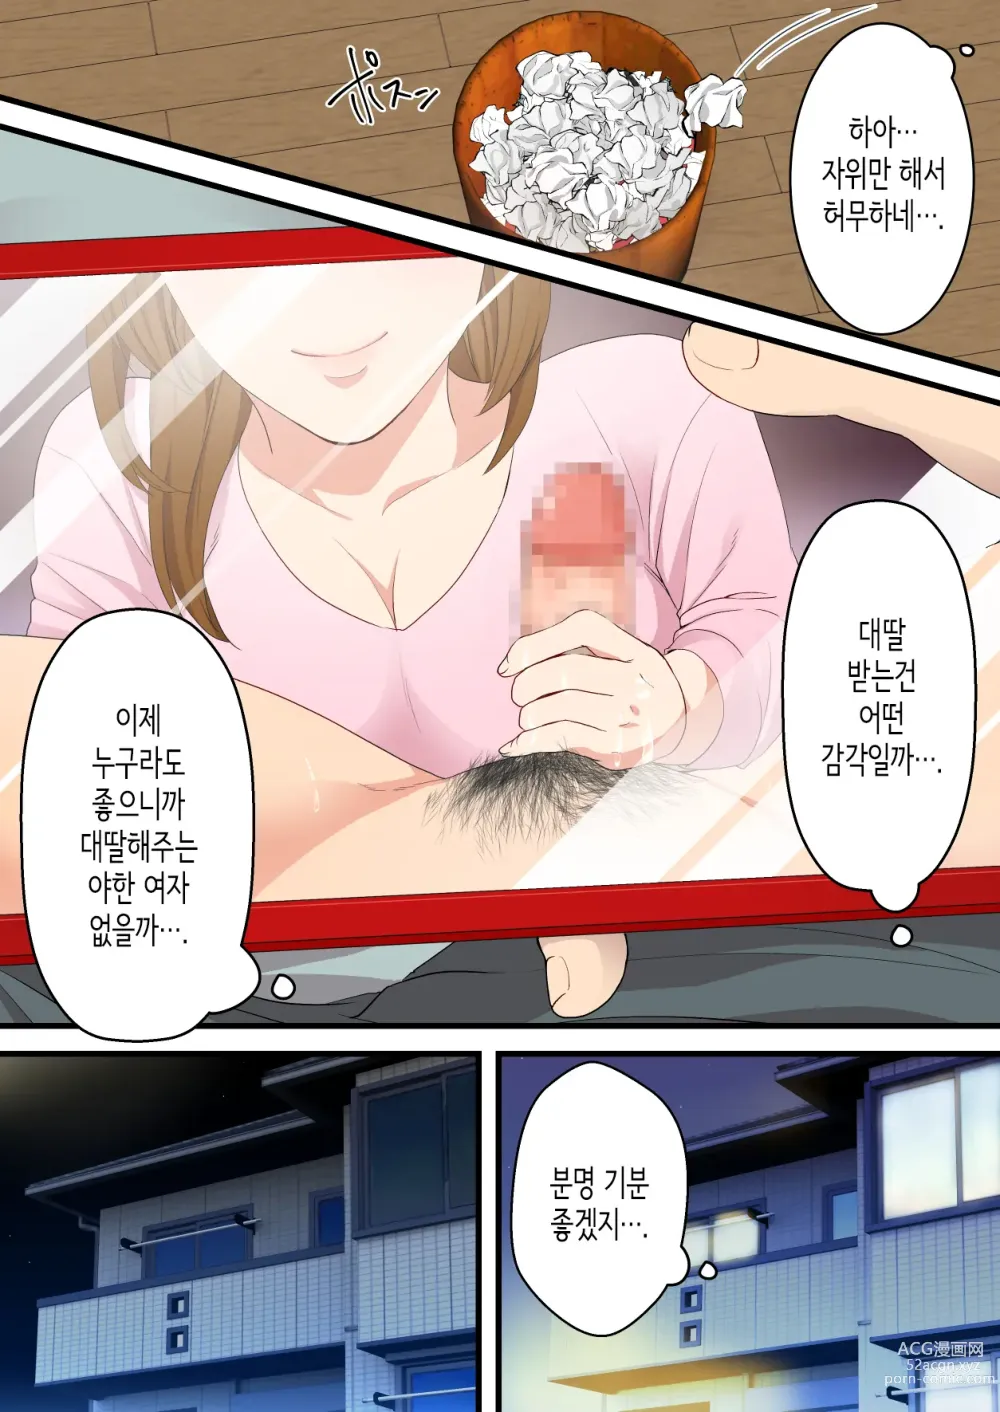 Page 7 of doujinshi 사이가 나쁘던 엄마와 아들이 달달한 커플이 되기까지